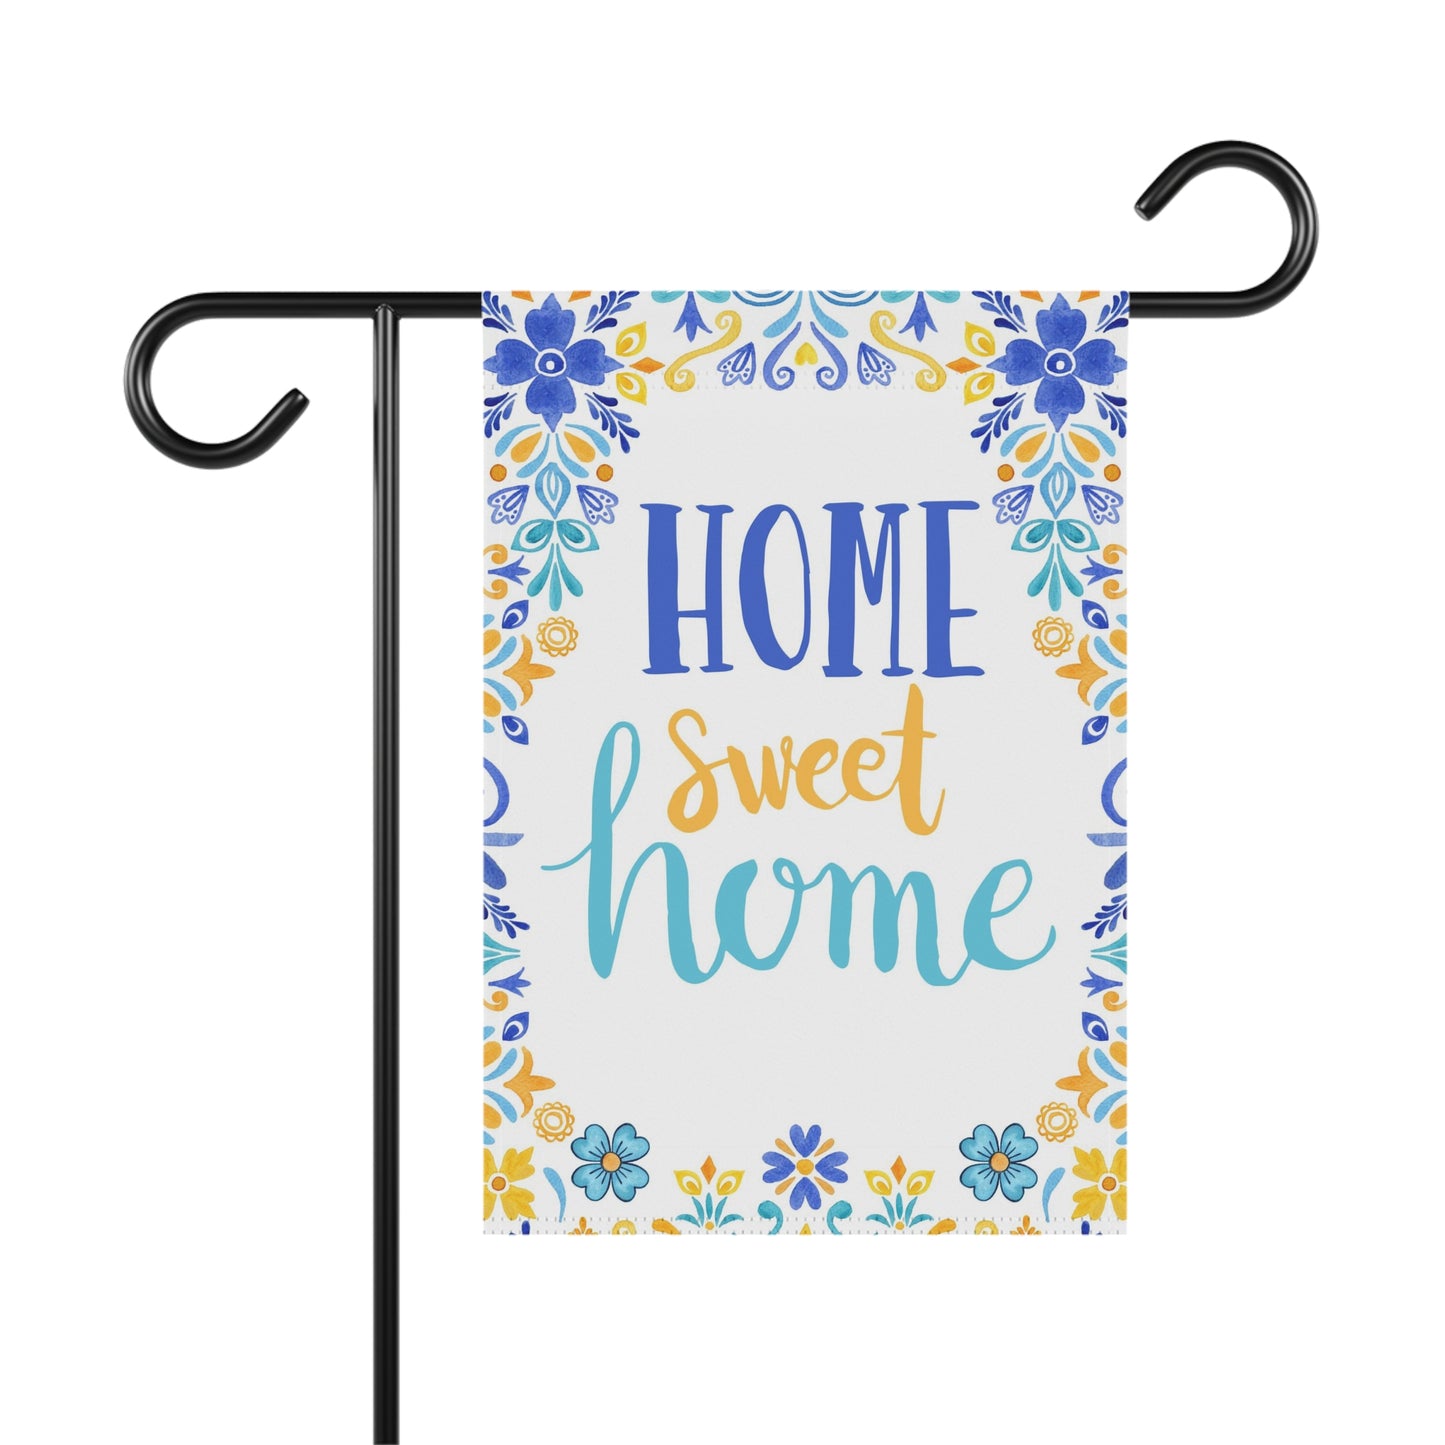 Home sweet home Garden Banner. Blue, white and yellow garden flag with mexican talavera.